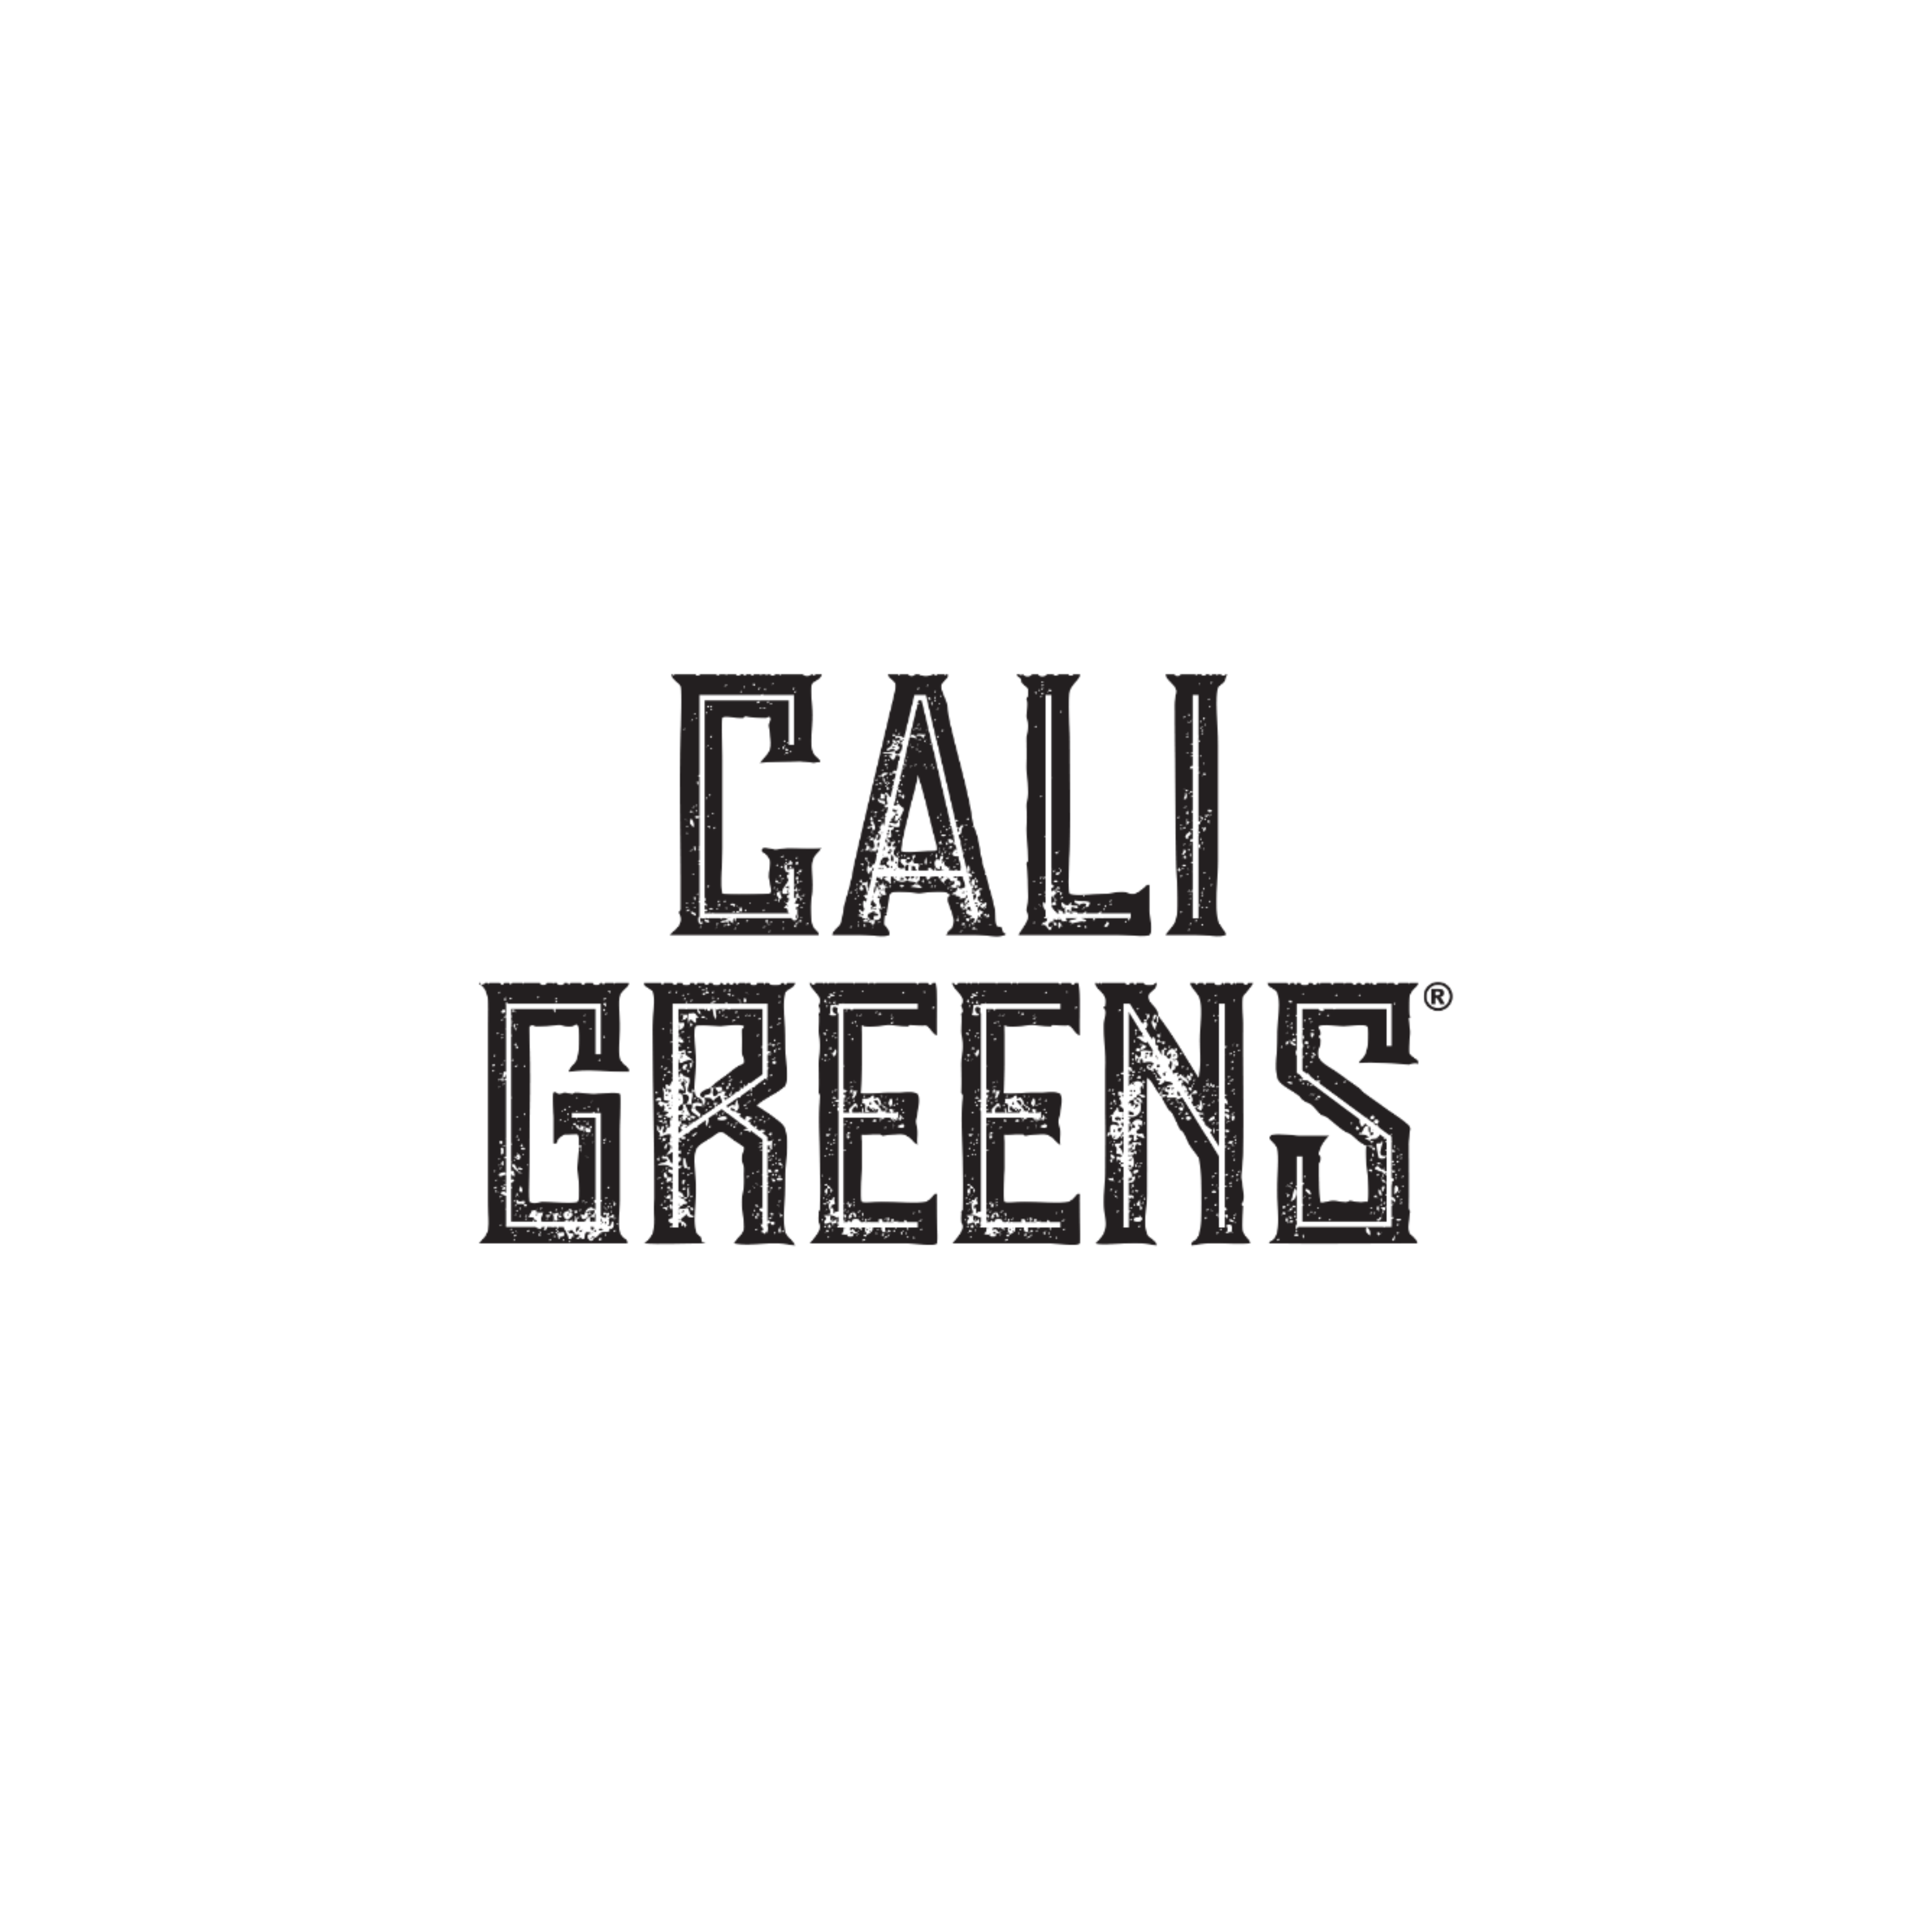 Cali green logo